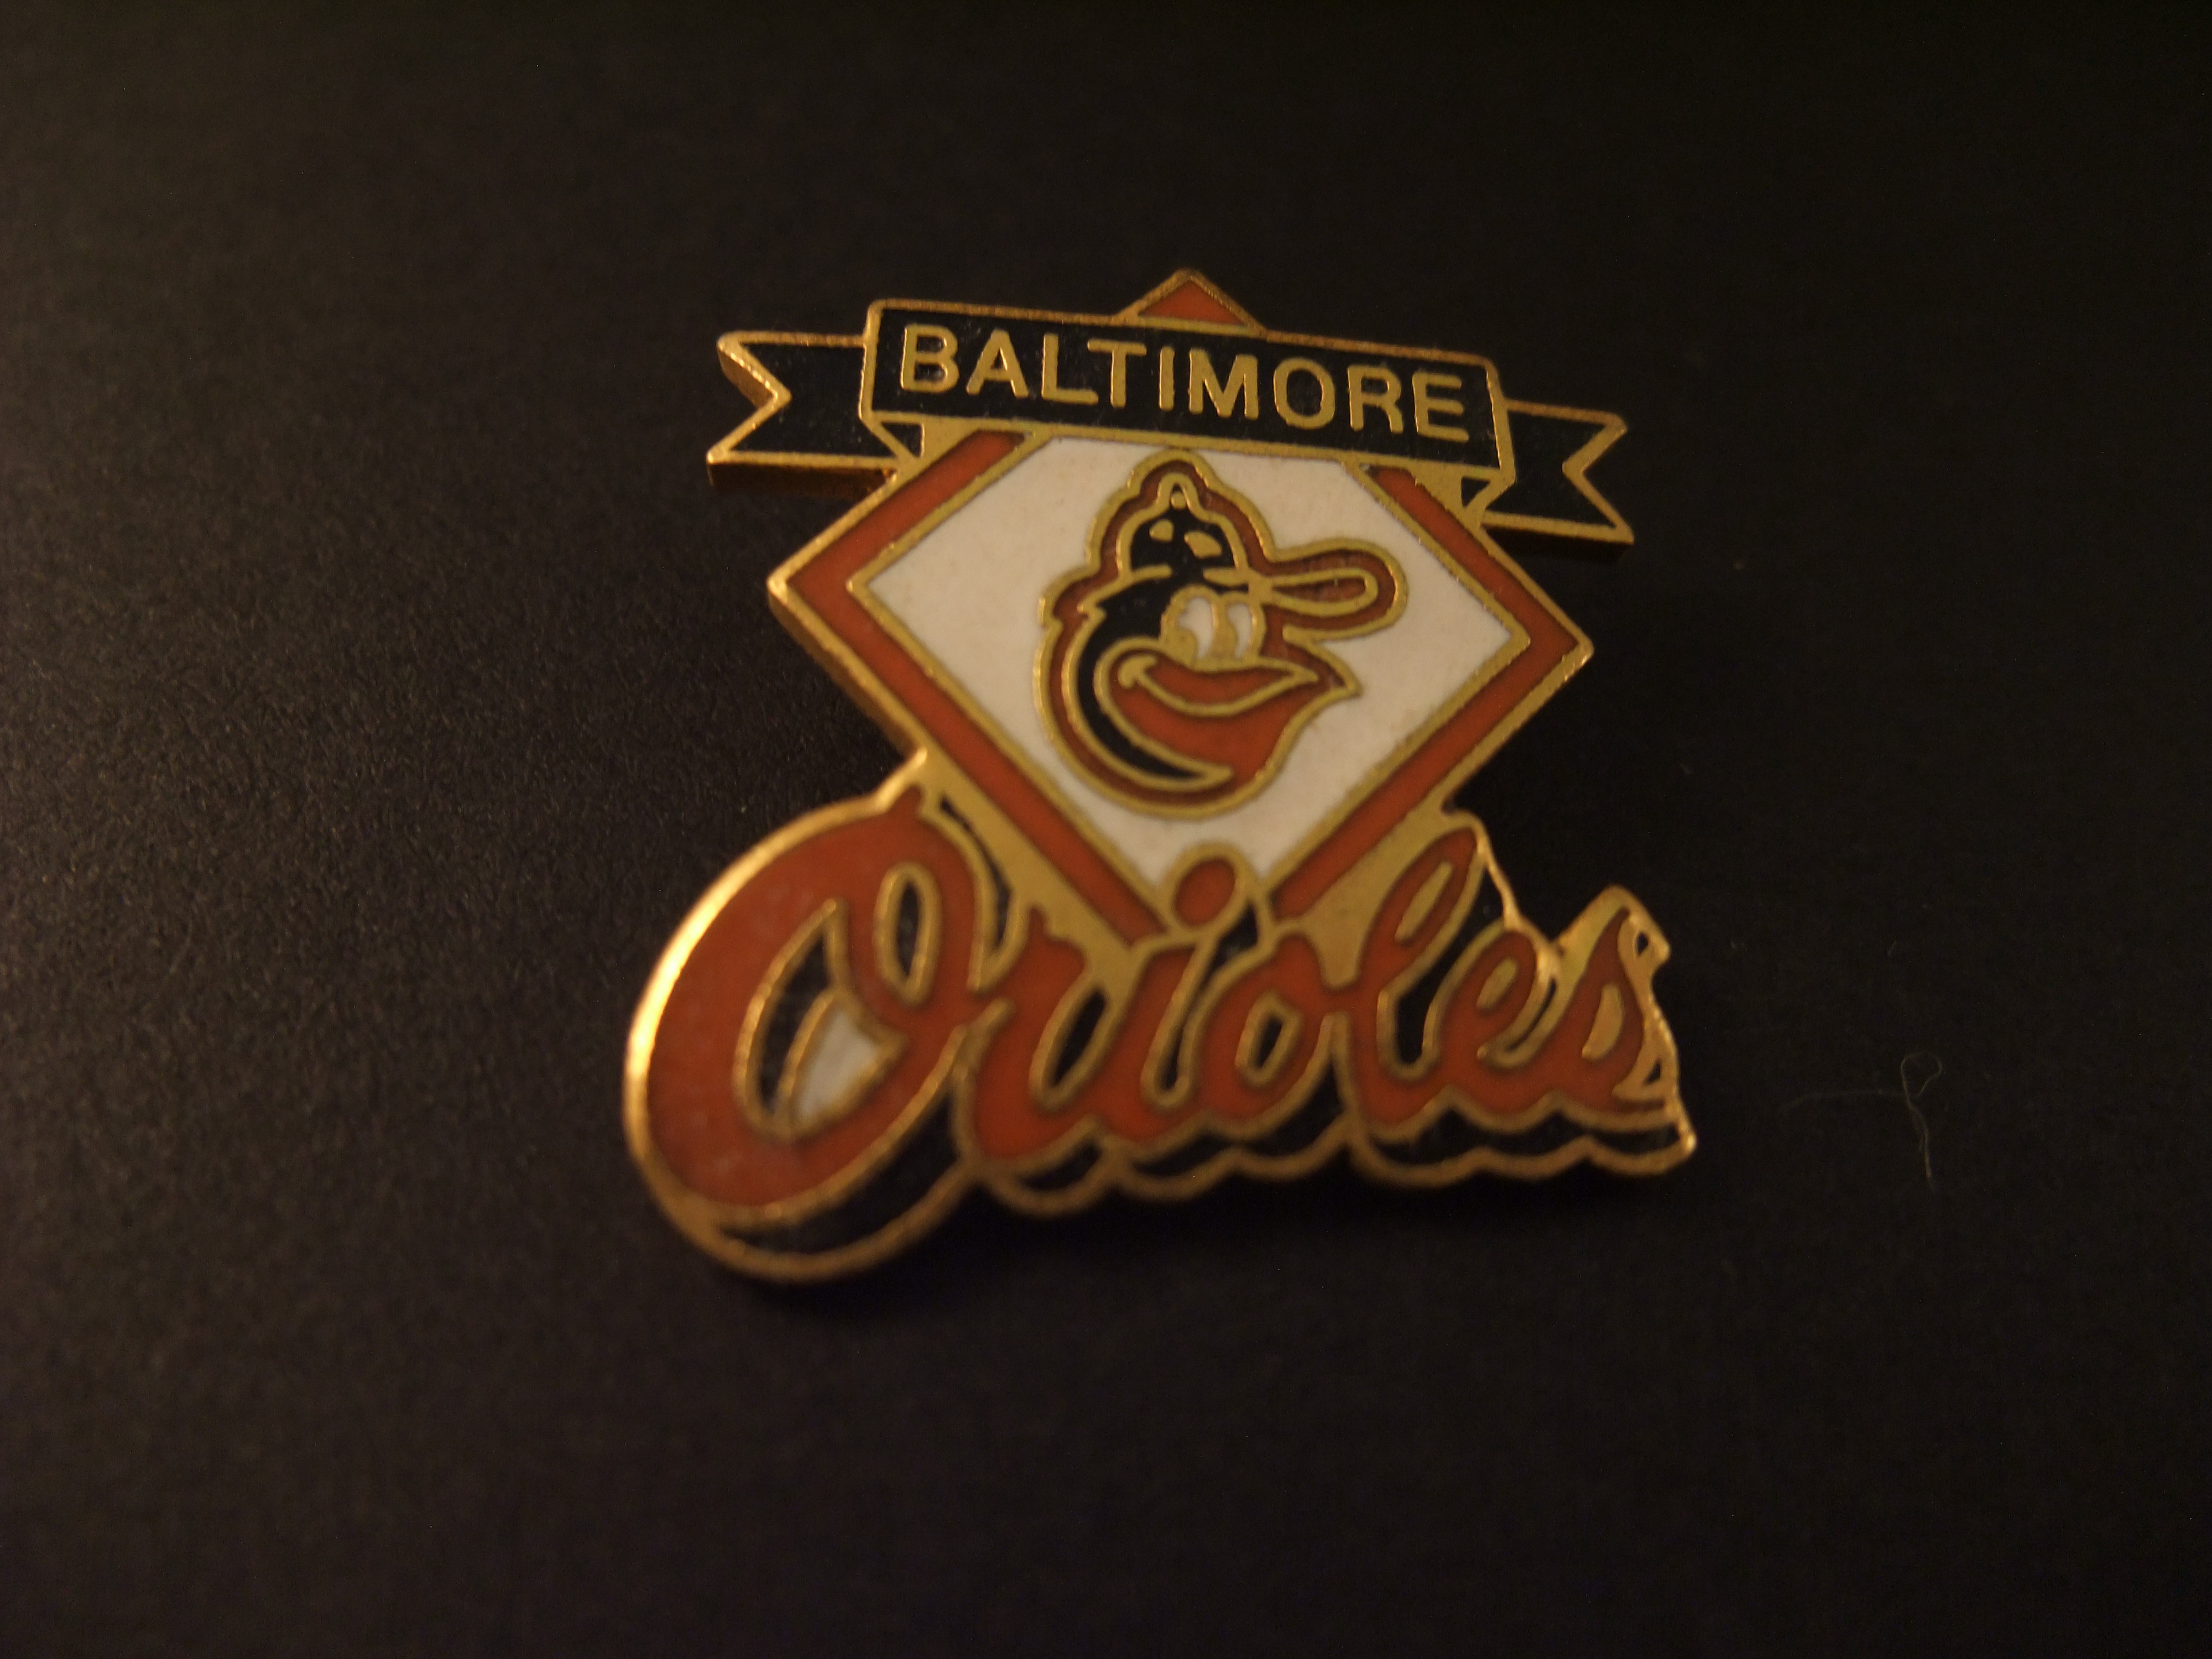 The Baltimore Orioles Amerikaanse honkbalclub